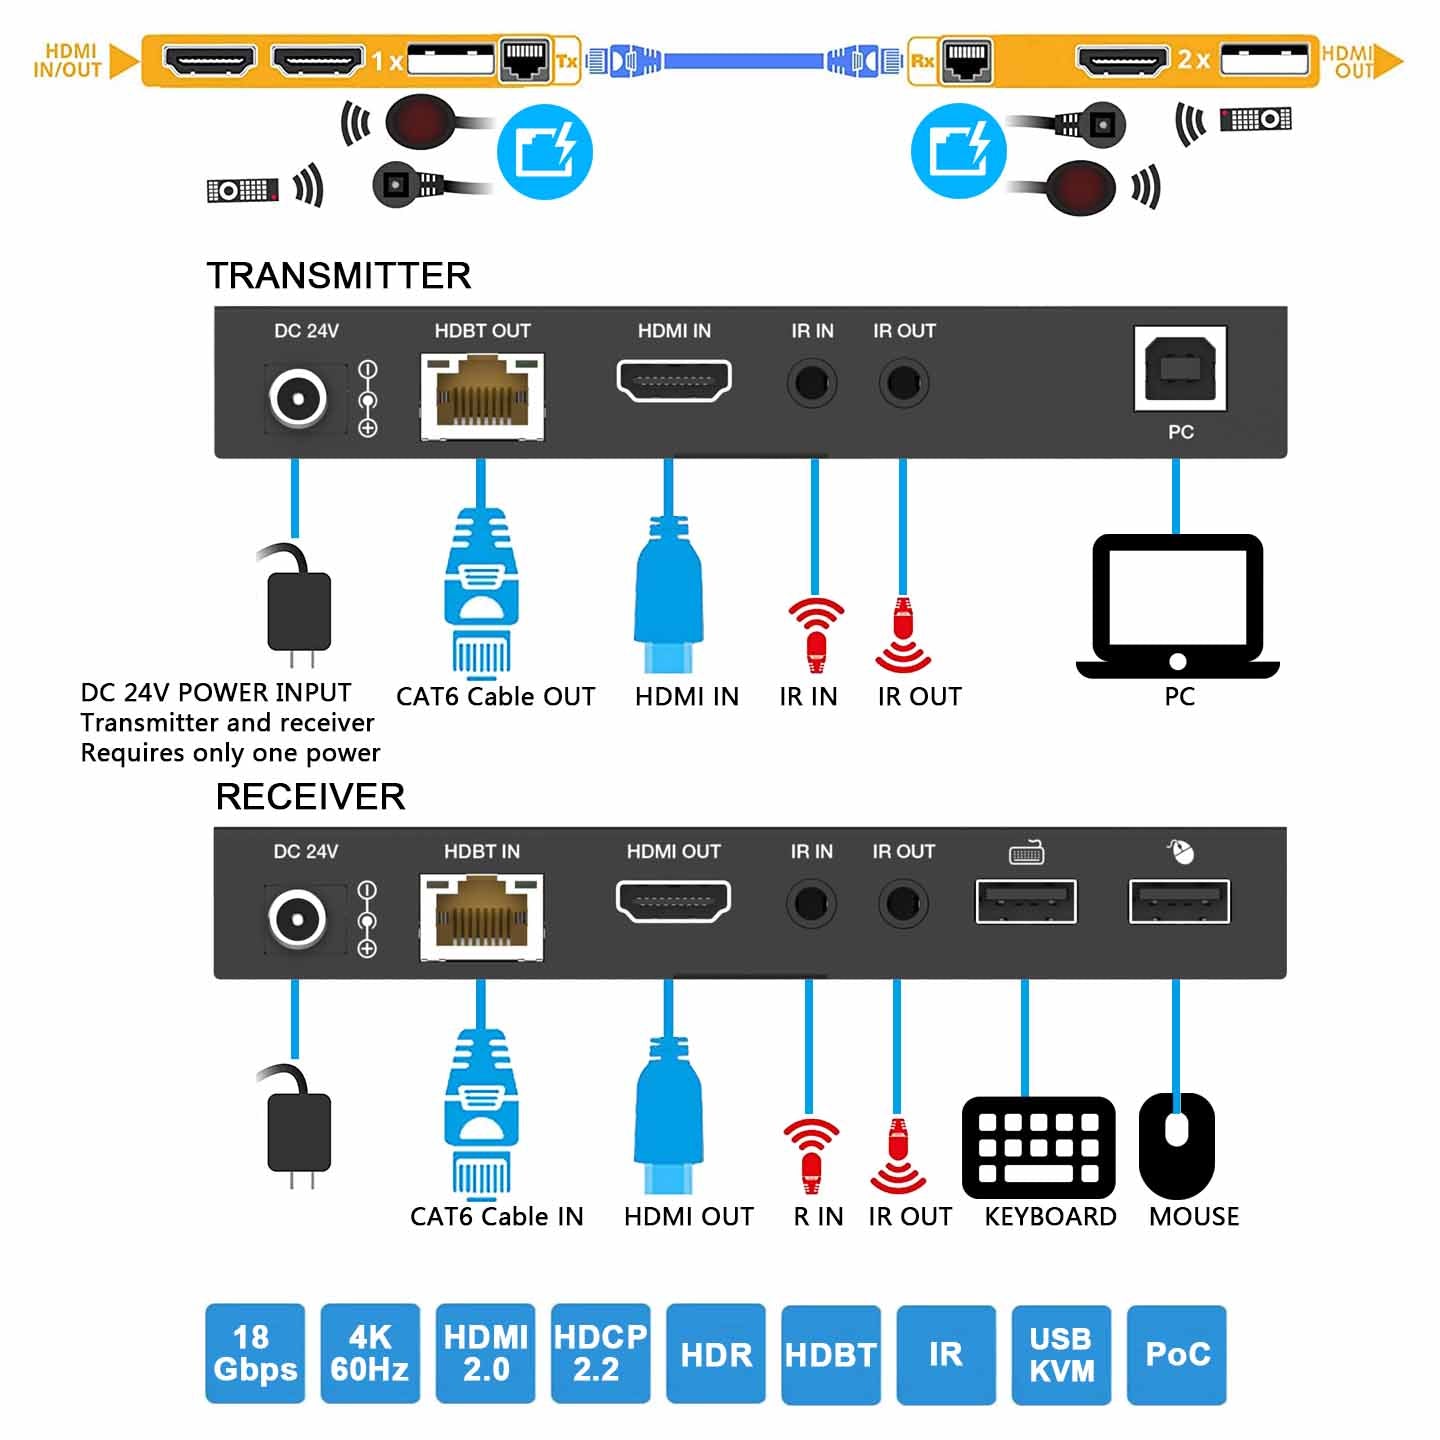 4K HDBaseT HDMI KVM Extender over CAT6 Cable 150m USB IR description